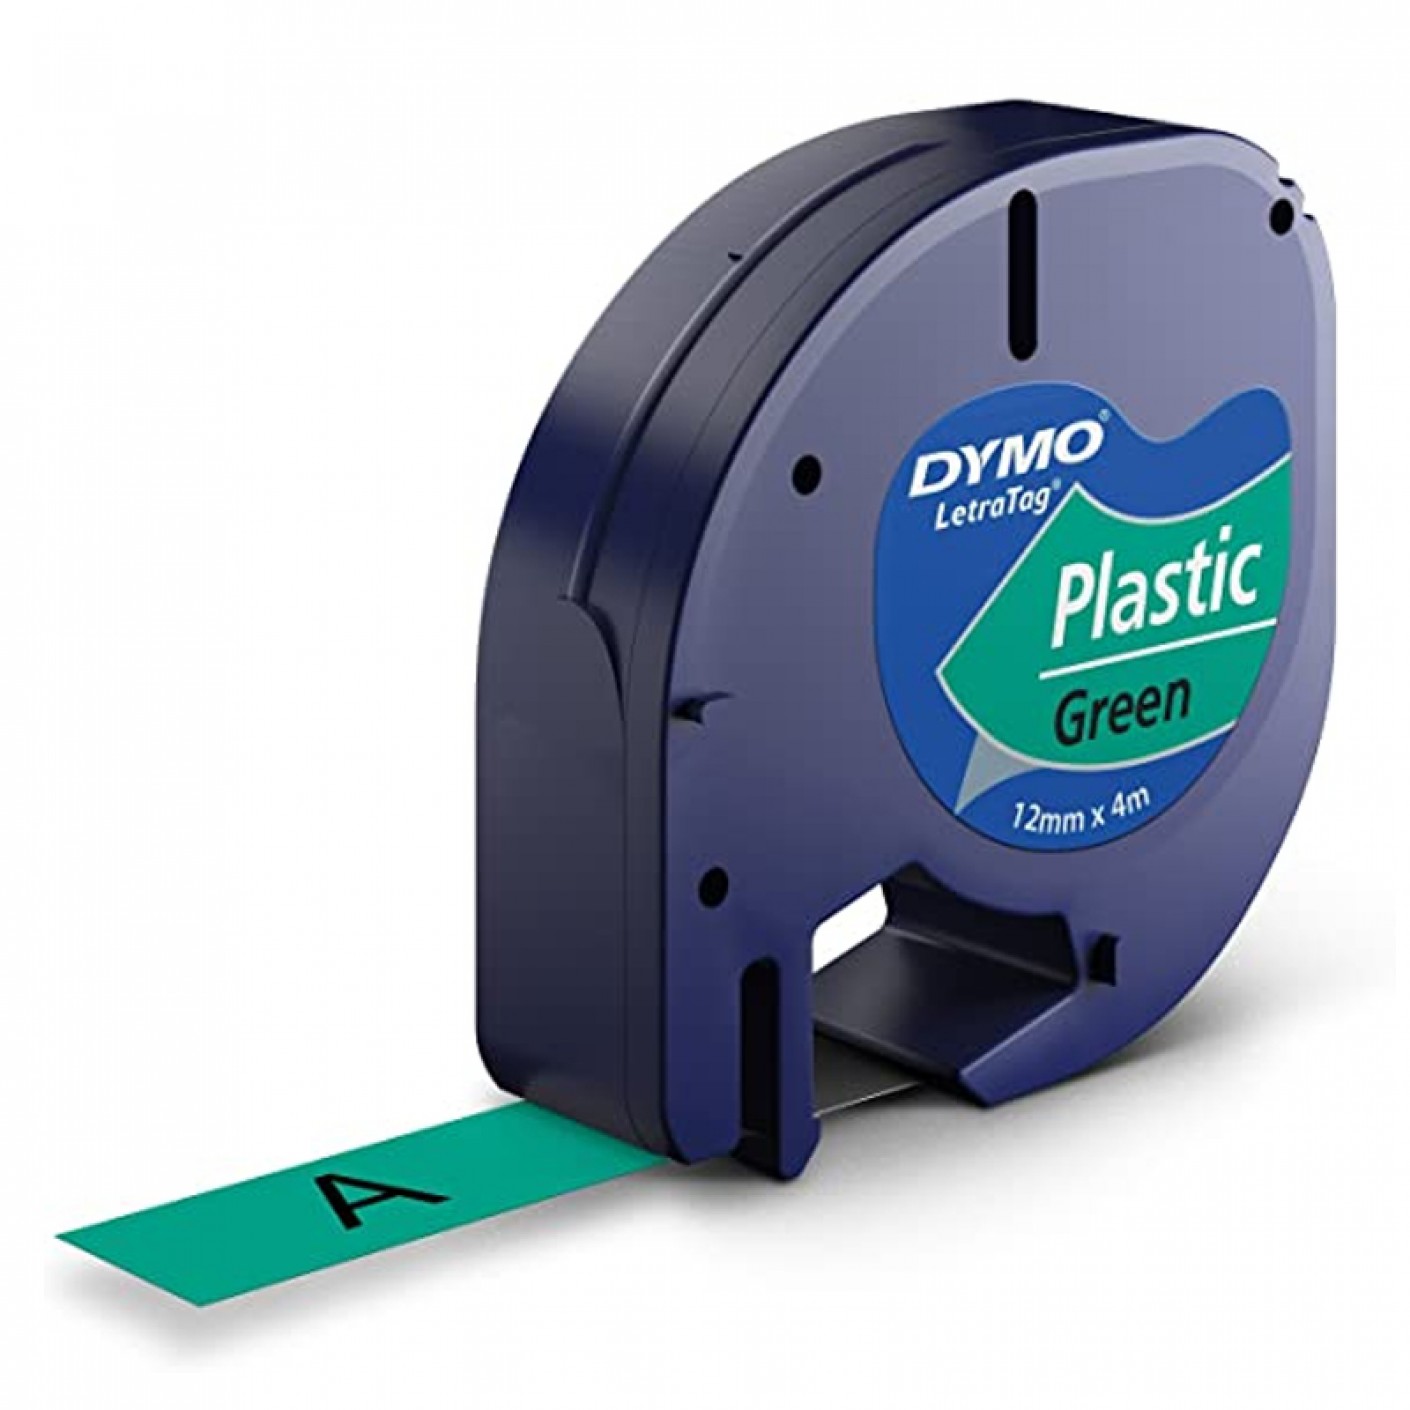 Dymo этикетки. Принтер ленточный Dymo LETRATAG. Пластиковая лента Dymo для letra tag 12ммх4мм. Dymo s0895890. Dymo 12 мм.